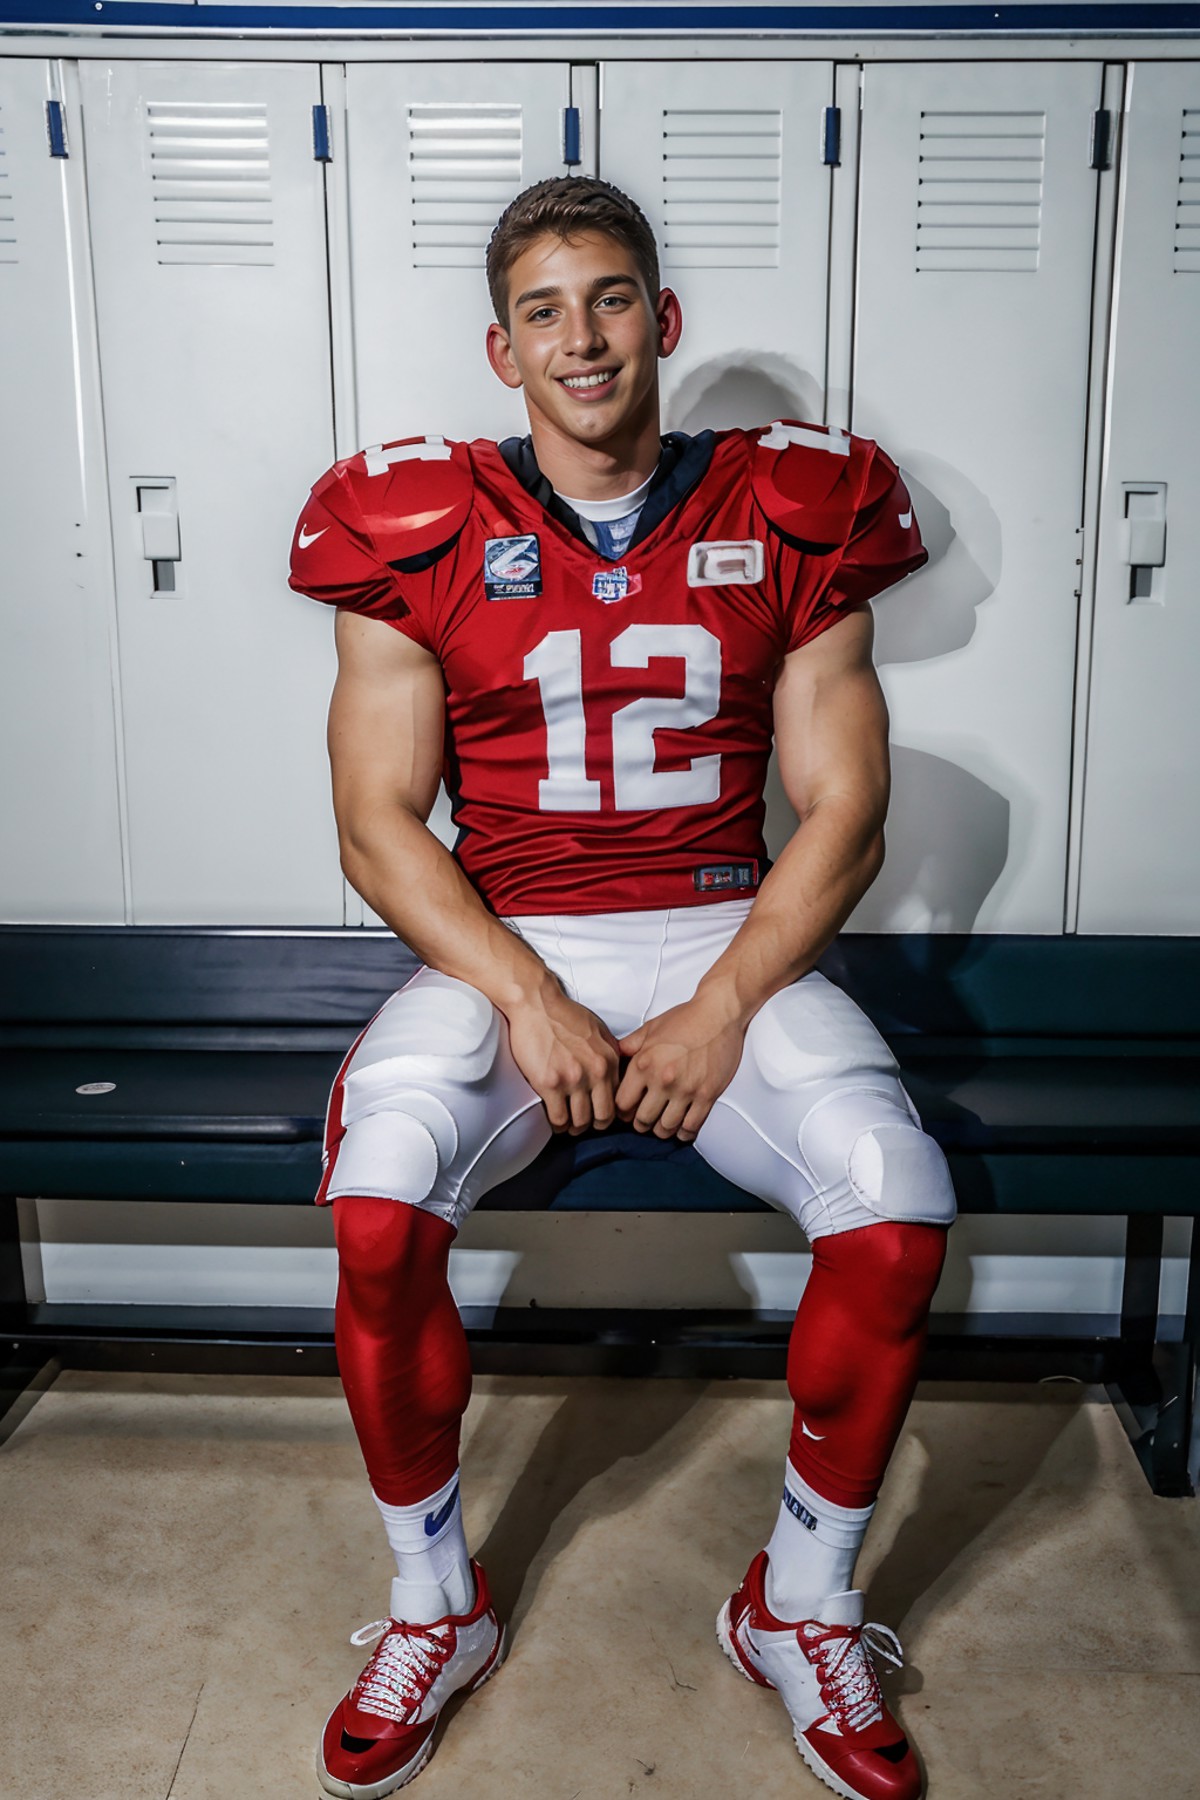 in an American football locker room, sitting on a bench, legs spread open, RenoGold, American football player wearing Amer...